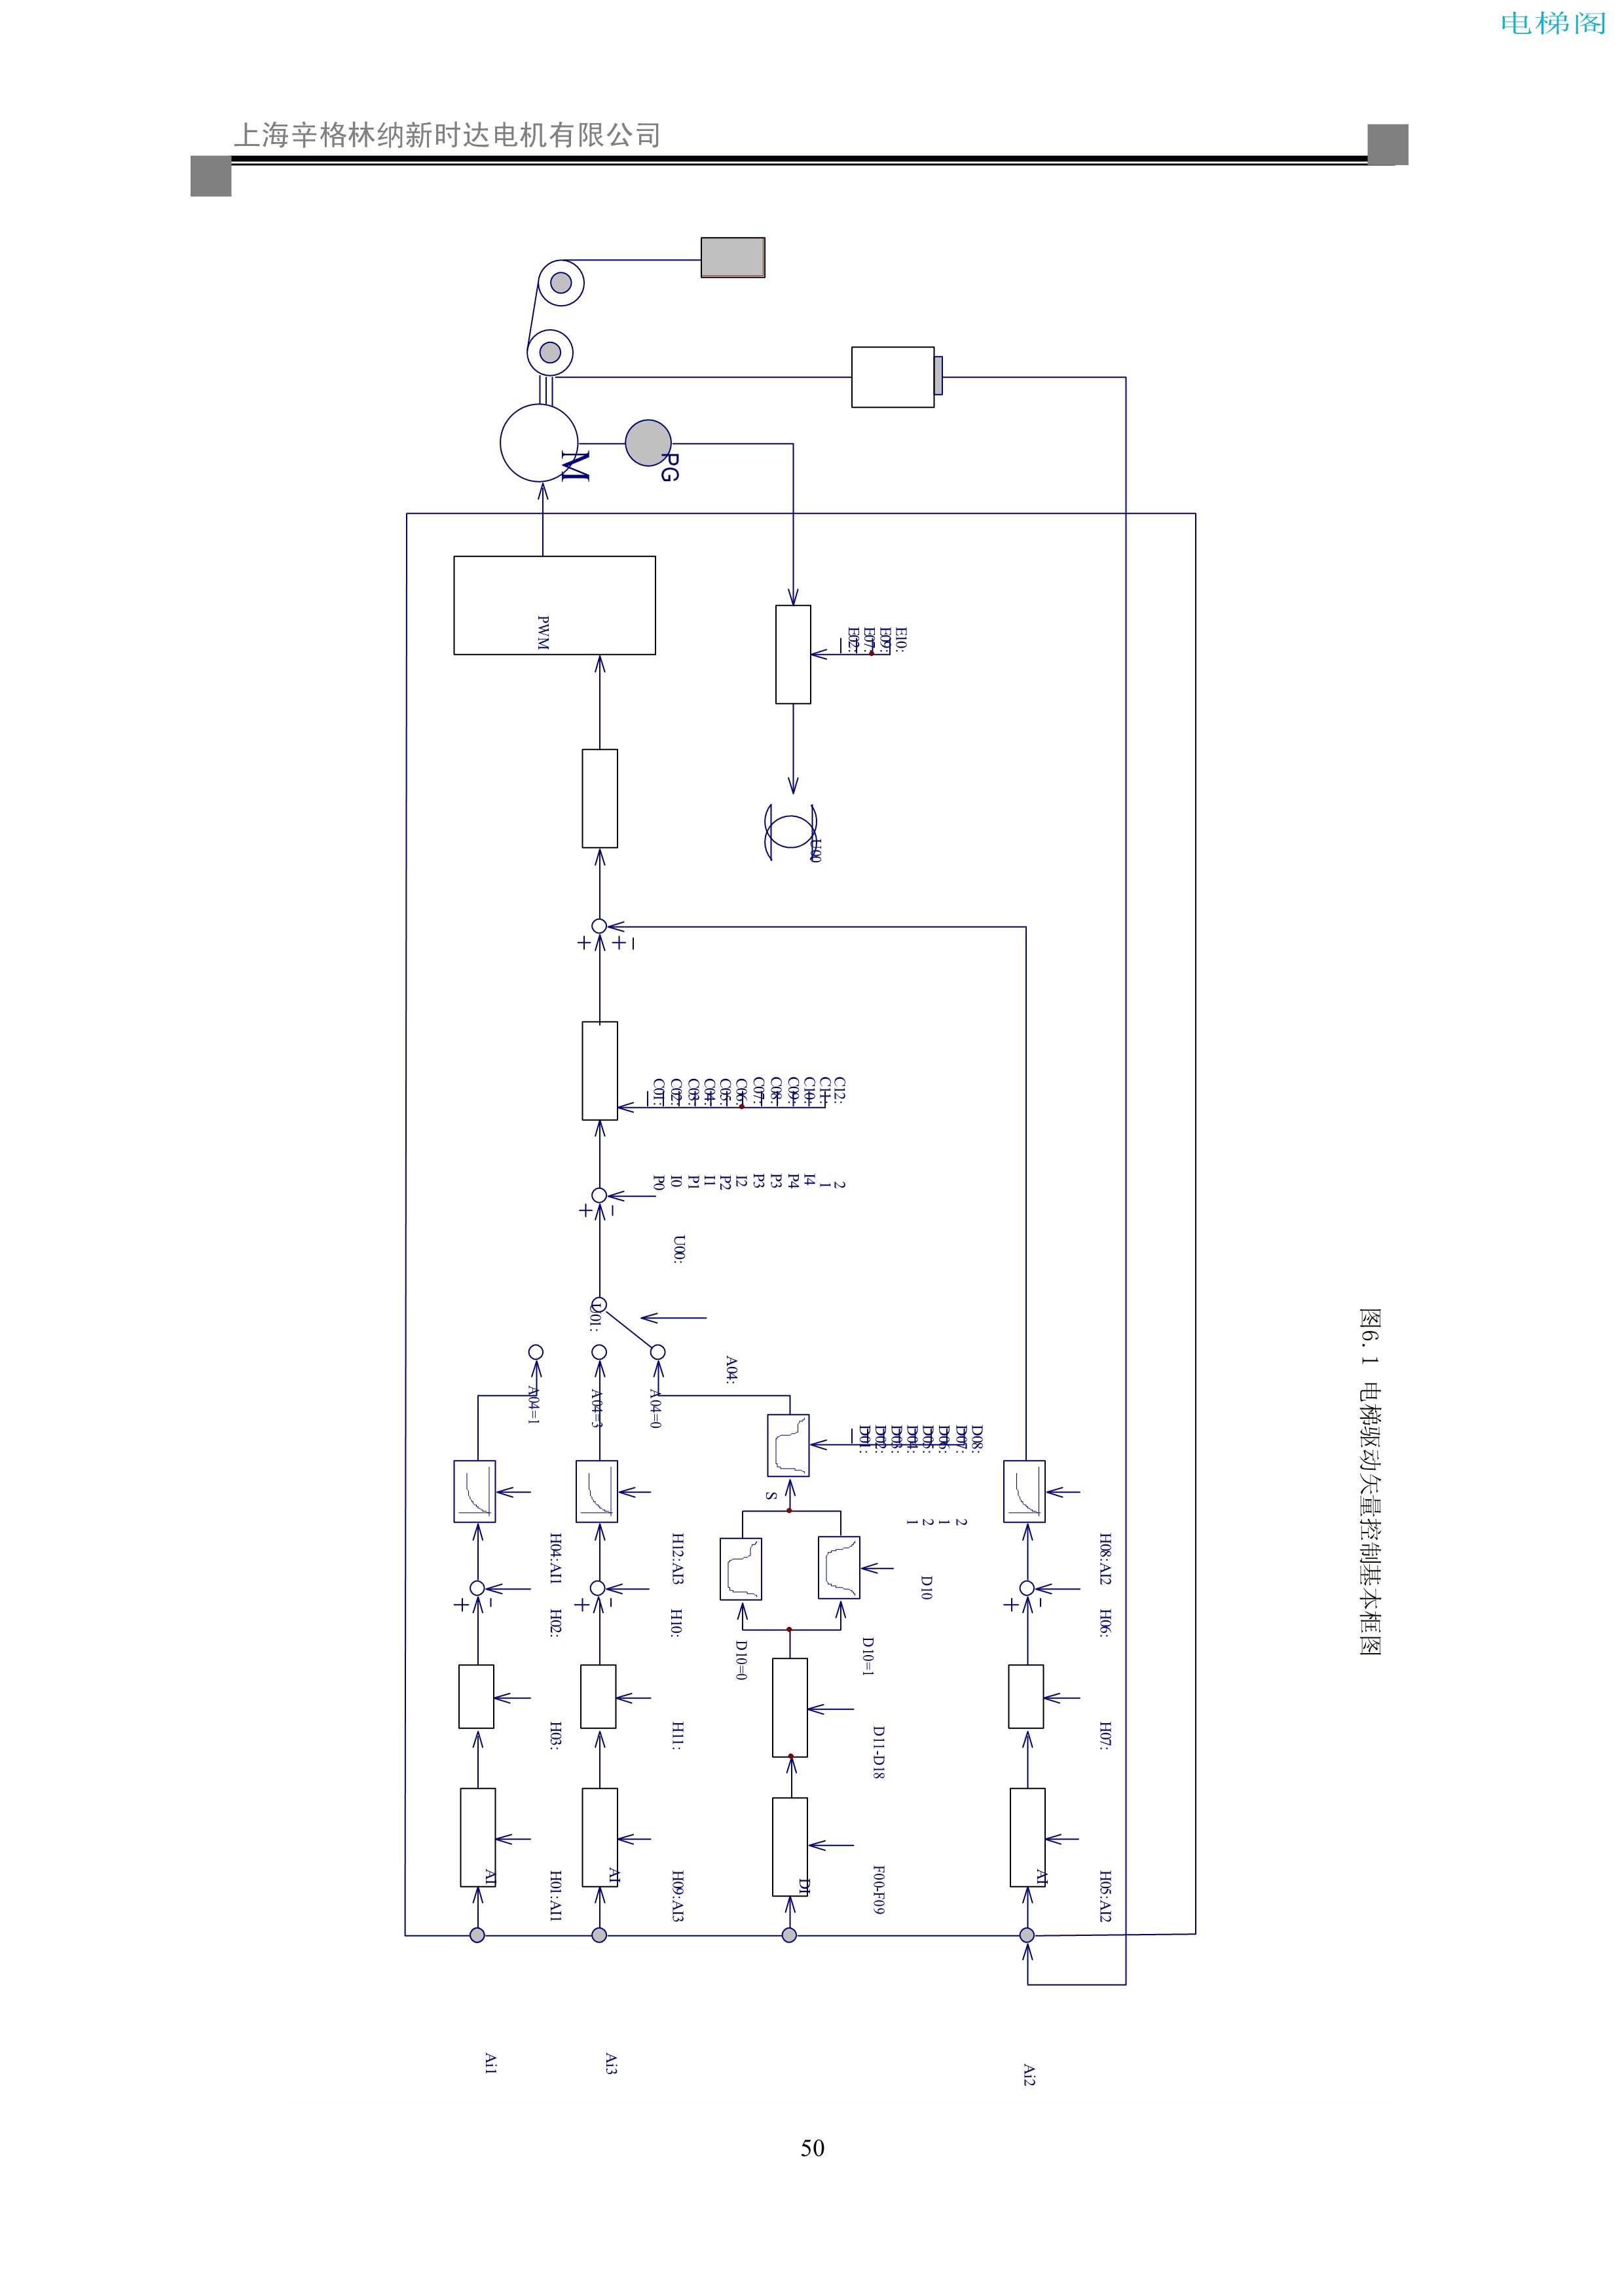 iAStar-S3系列电梯专用变频器使用说明书-9(V2[1].03)_58.jpg